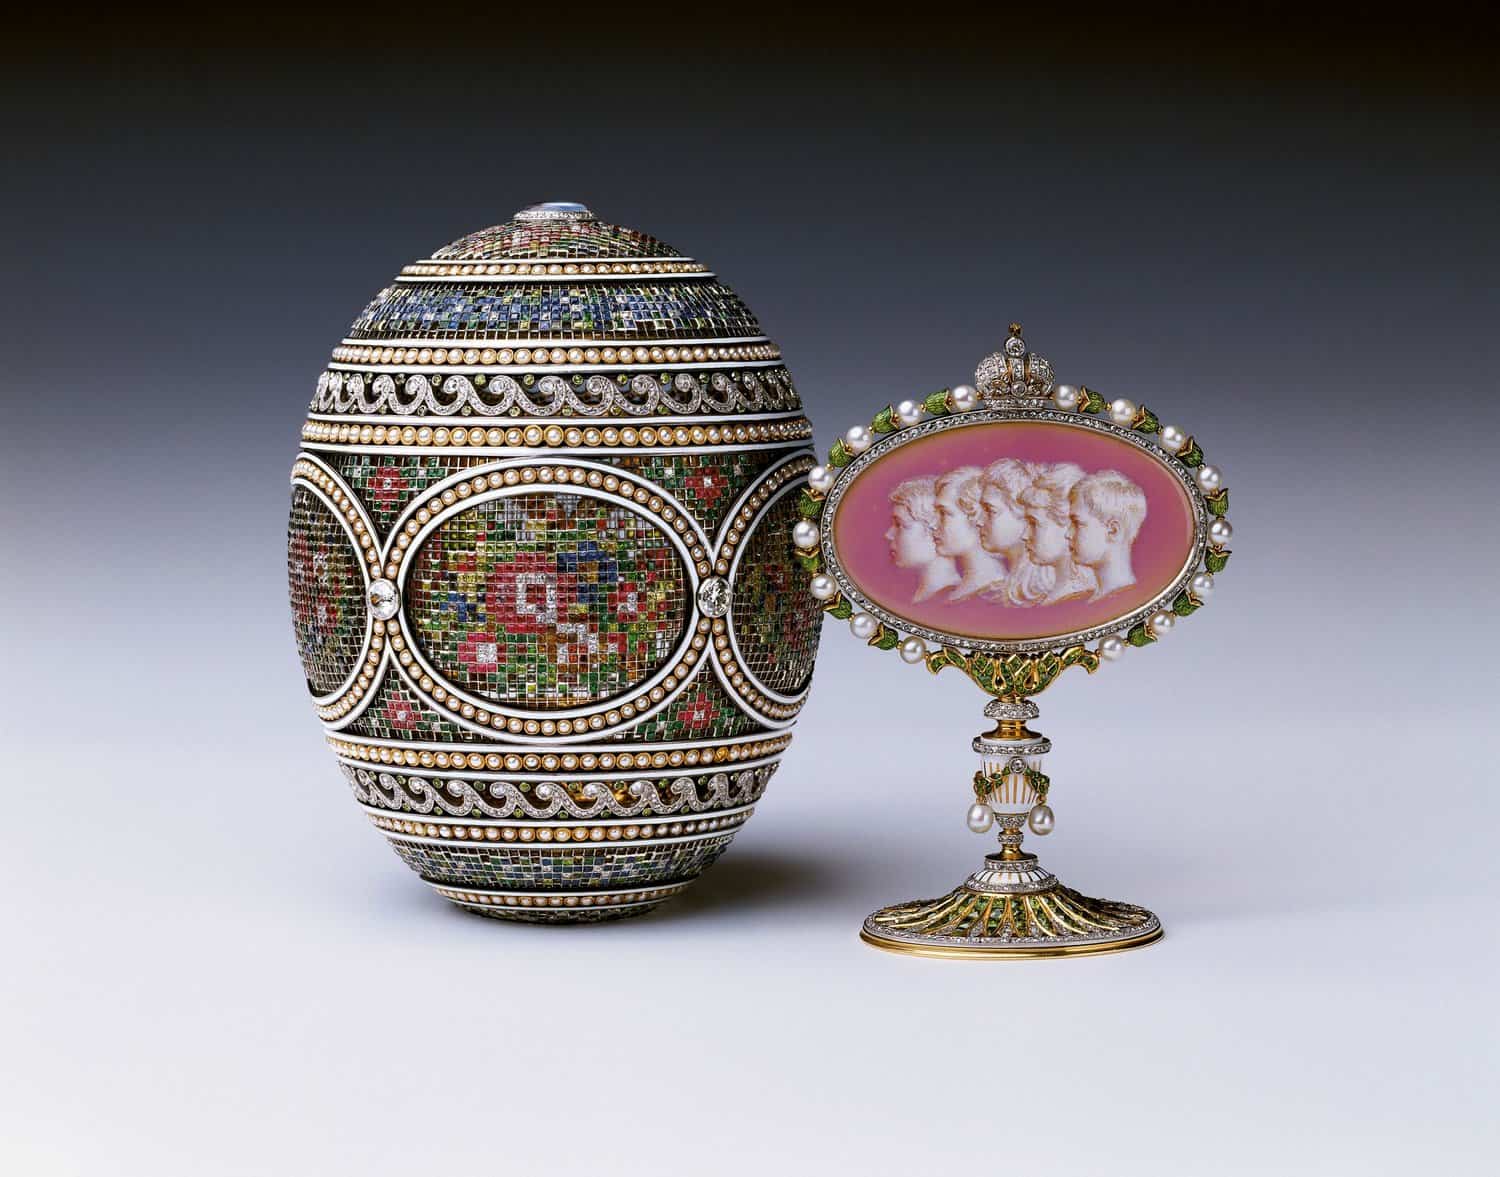 The Mosaic Egg Faberge